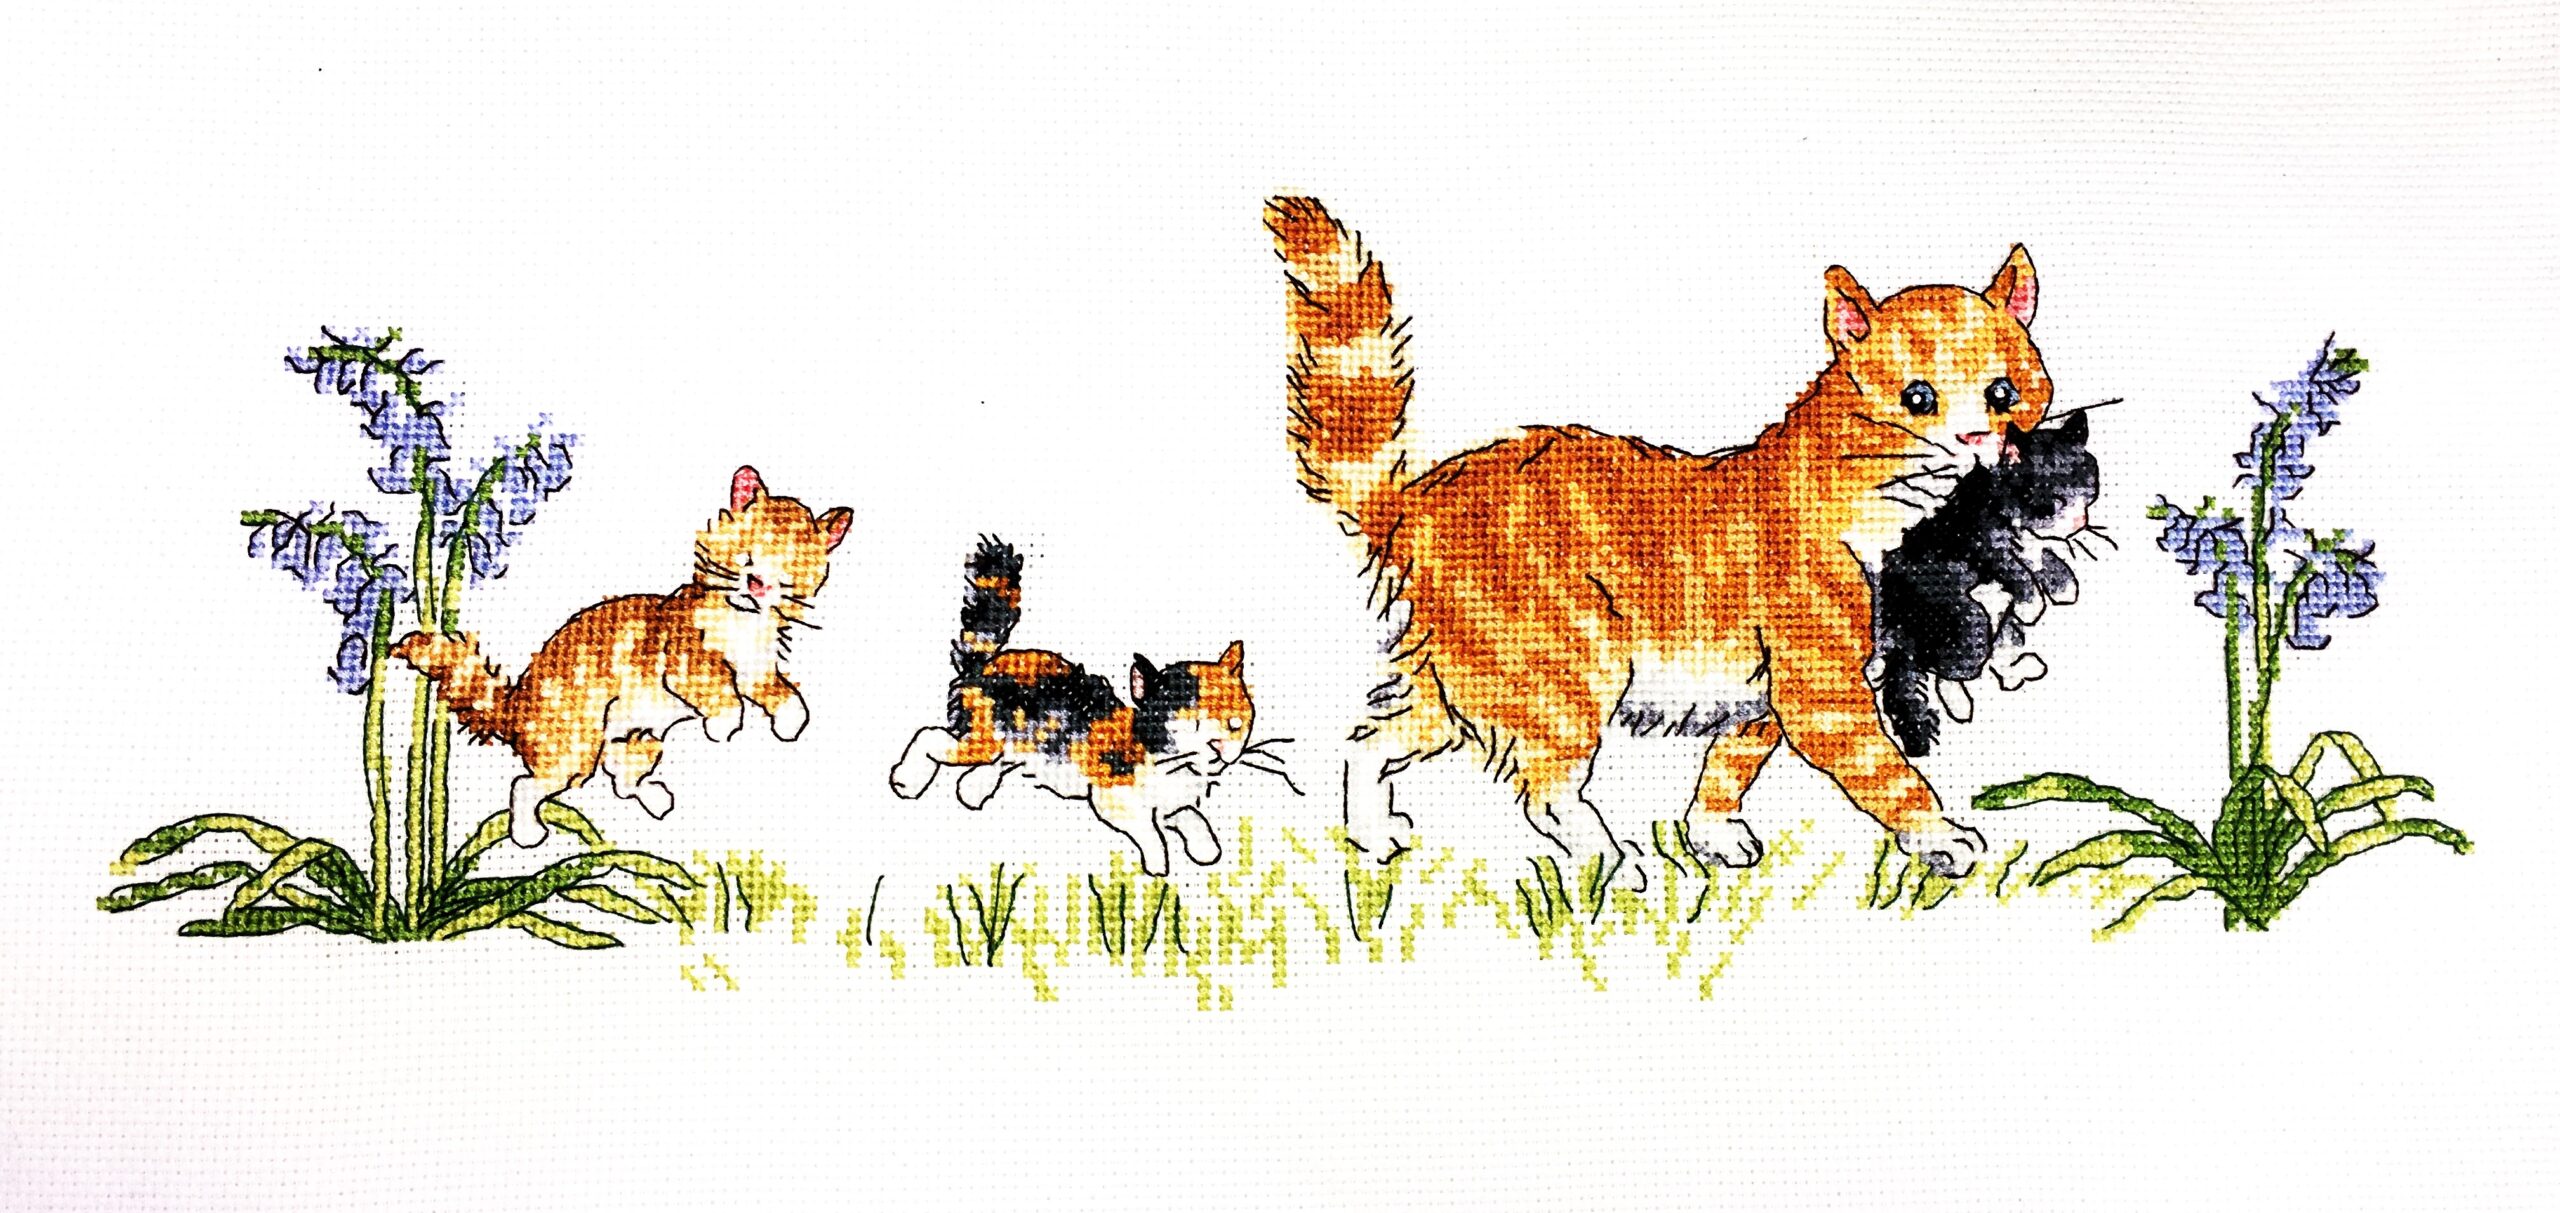 Mittens & Her Kittens